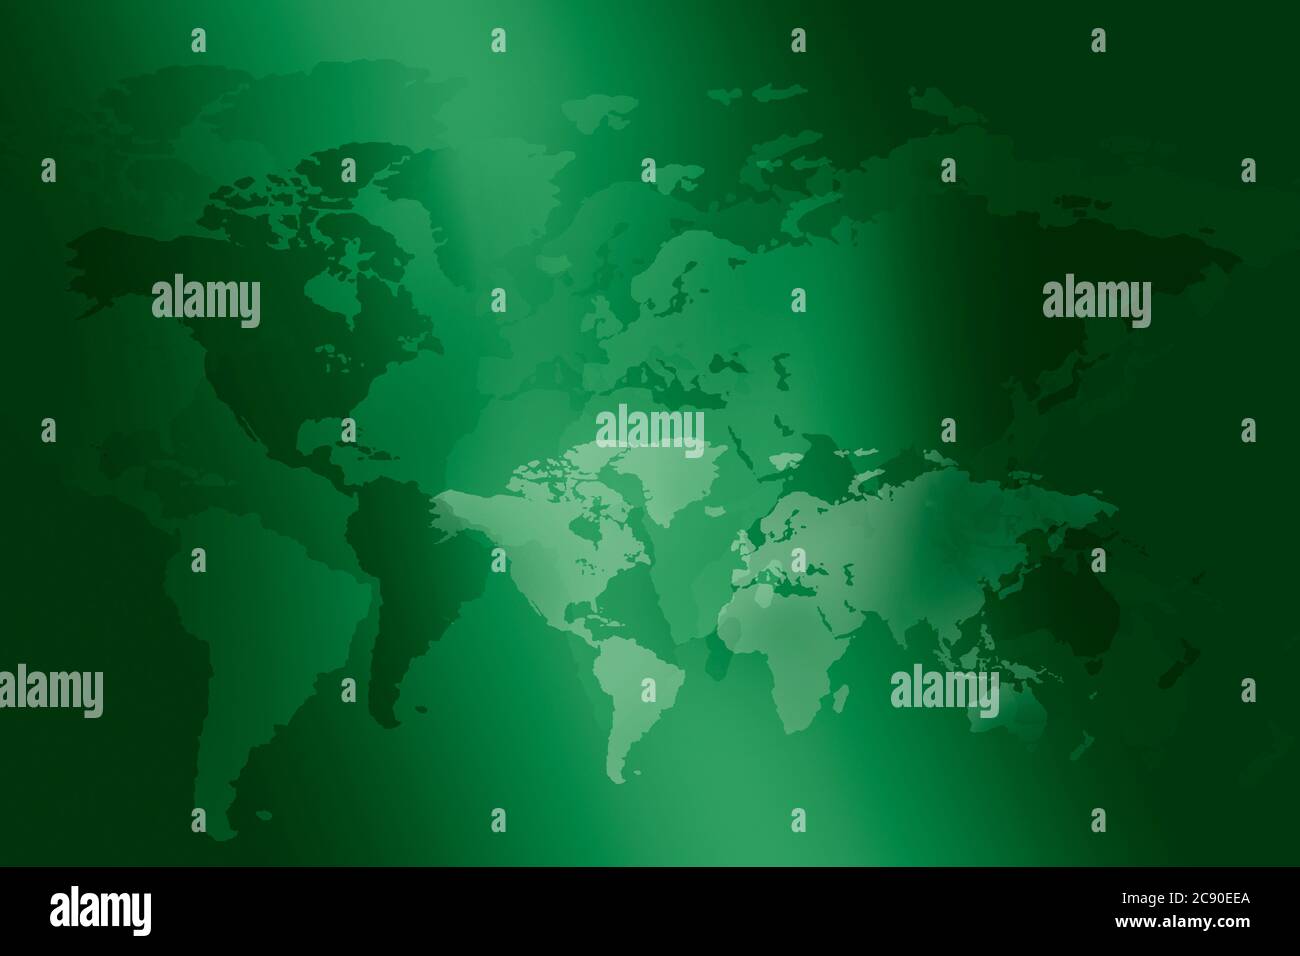 Weltkarte in grün auf grün Stockfoto